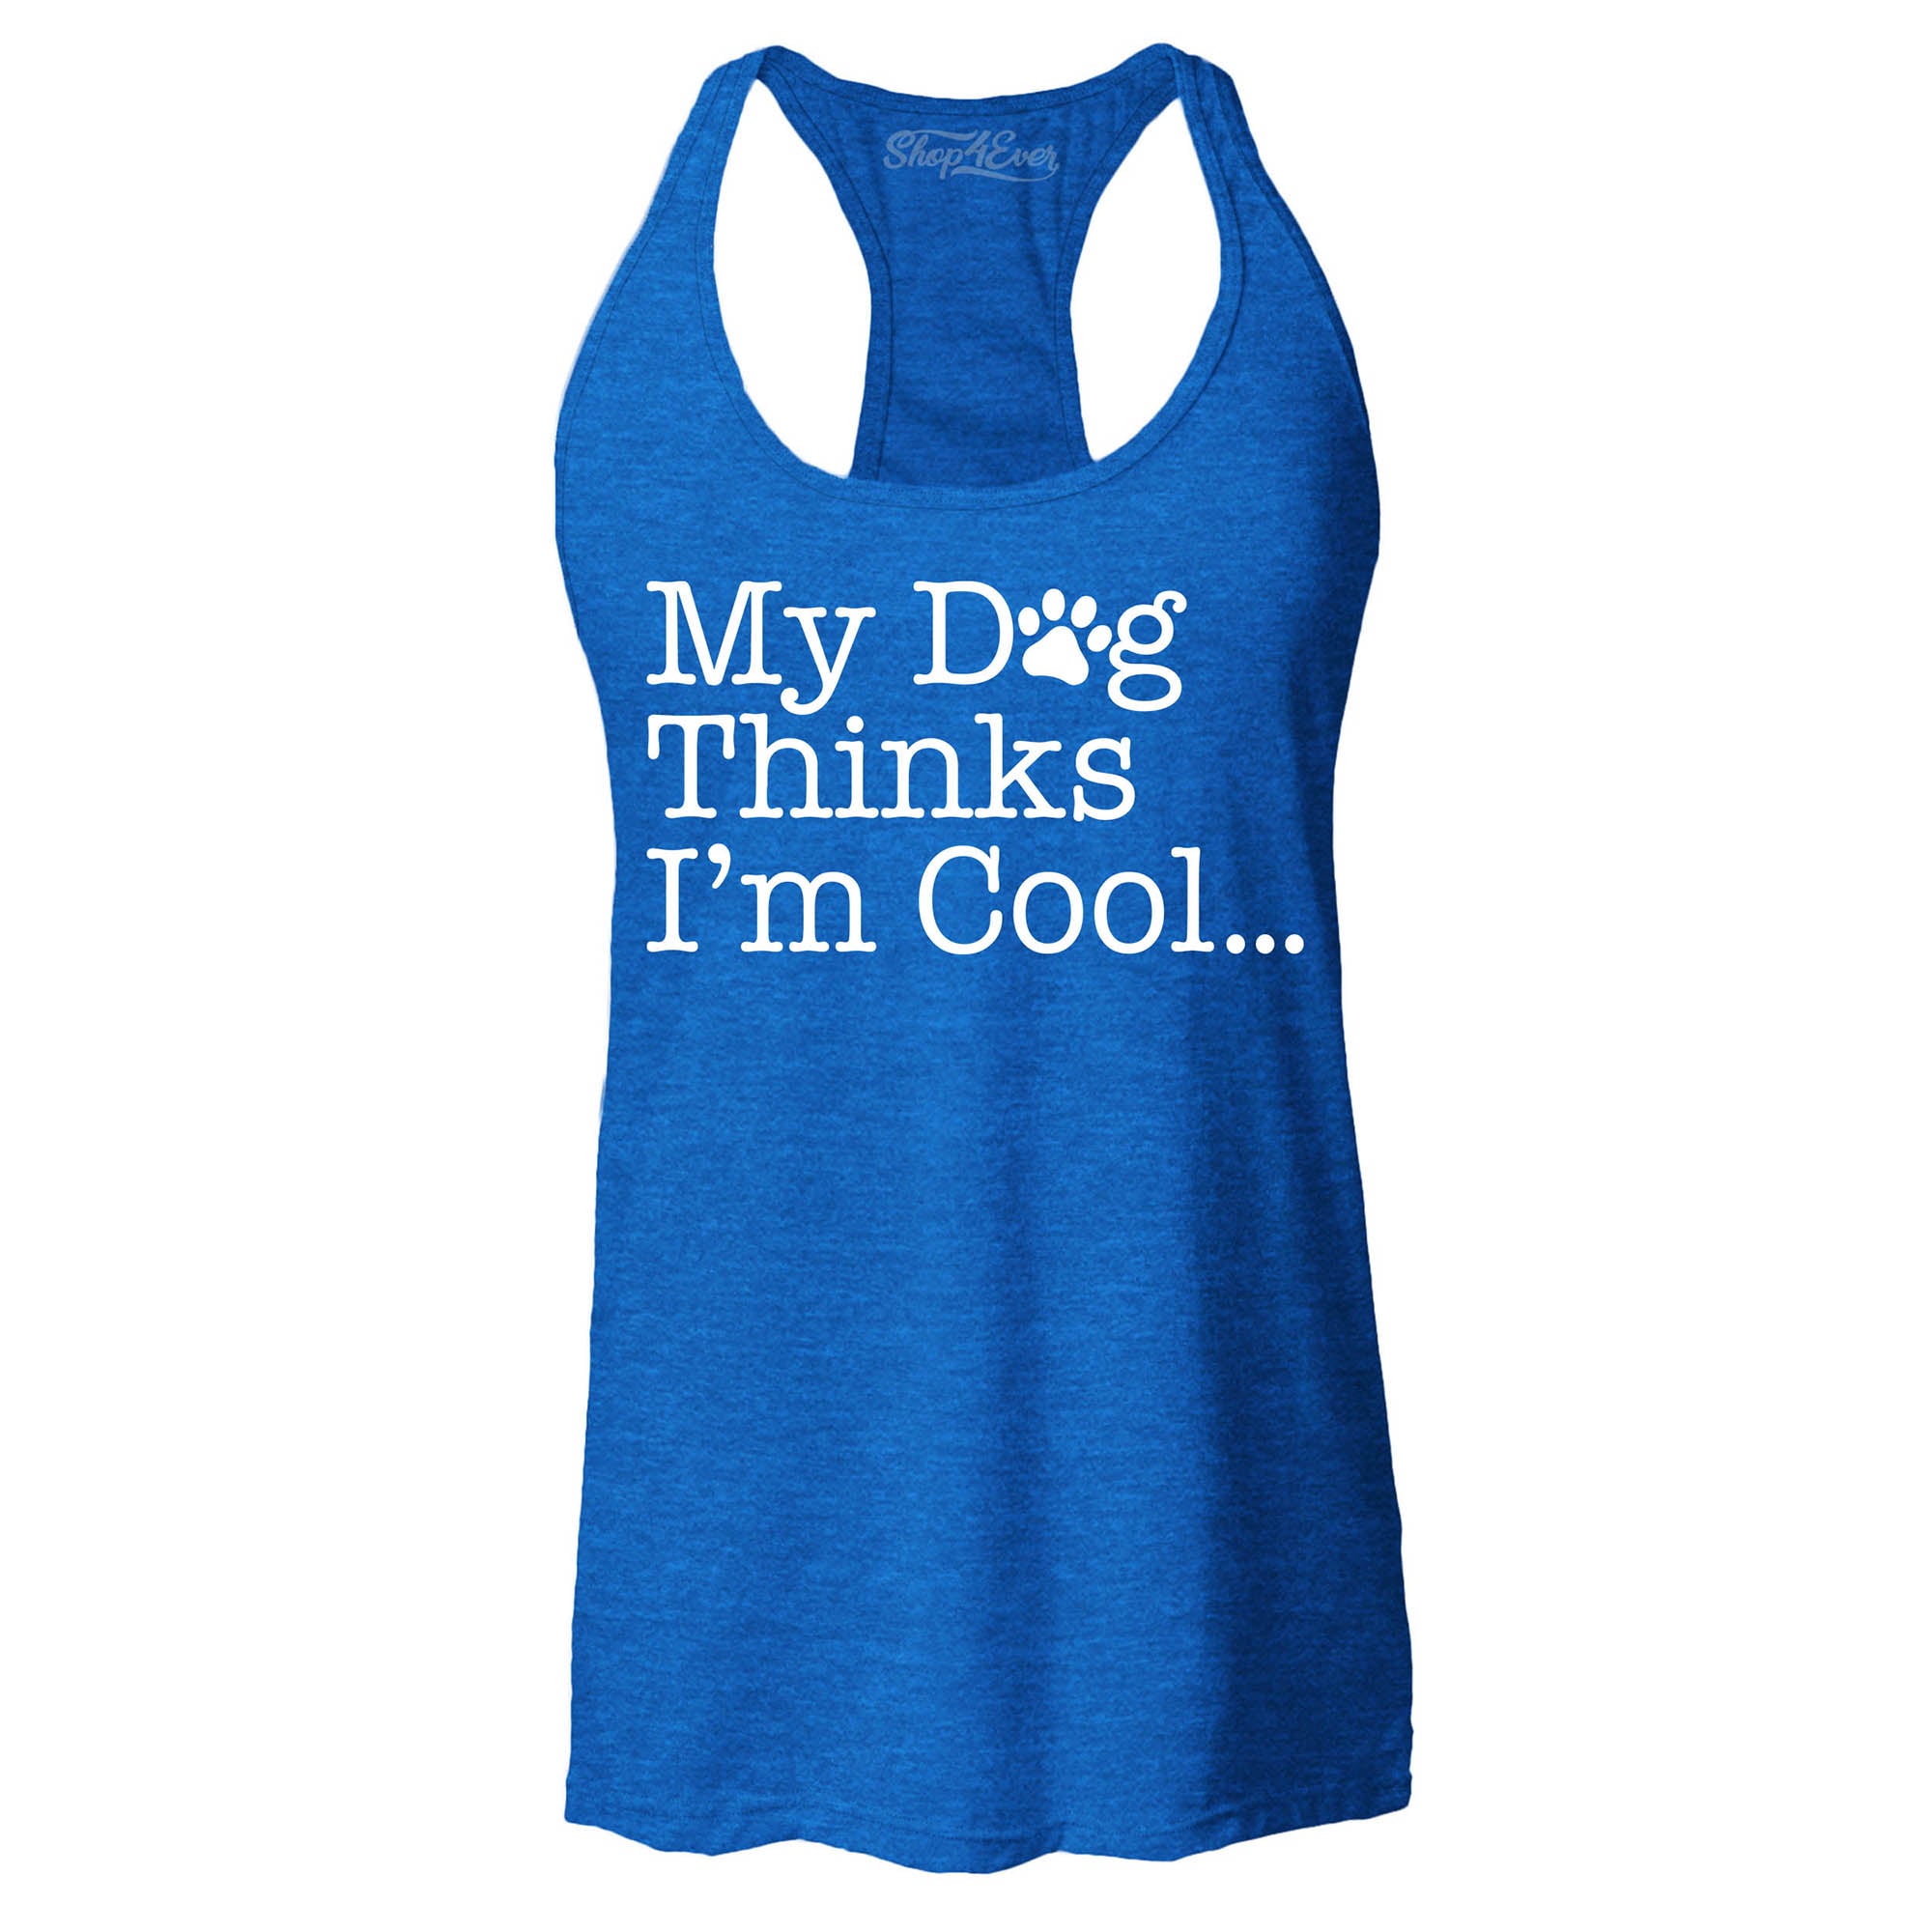 My Dog Thinks I'm Cool… Women's Racerback Tank Top Slim Fit